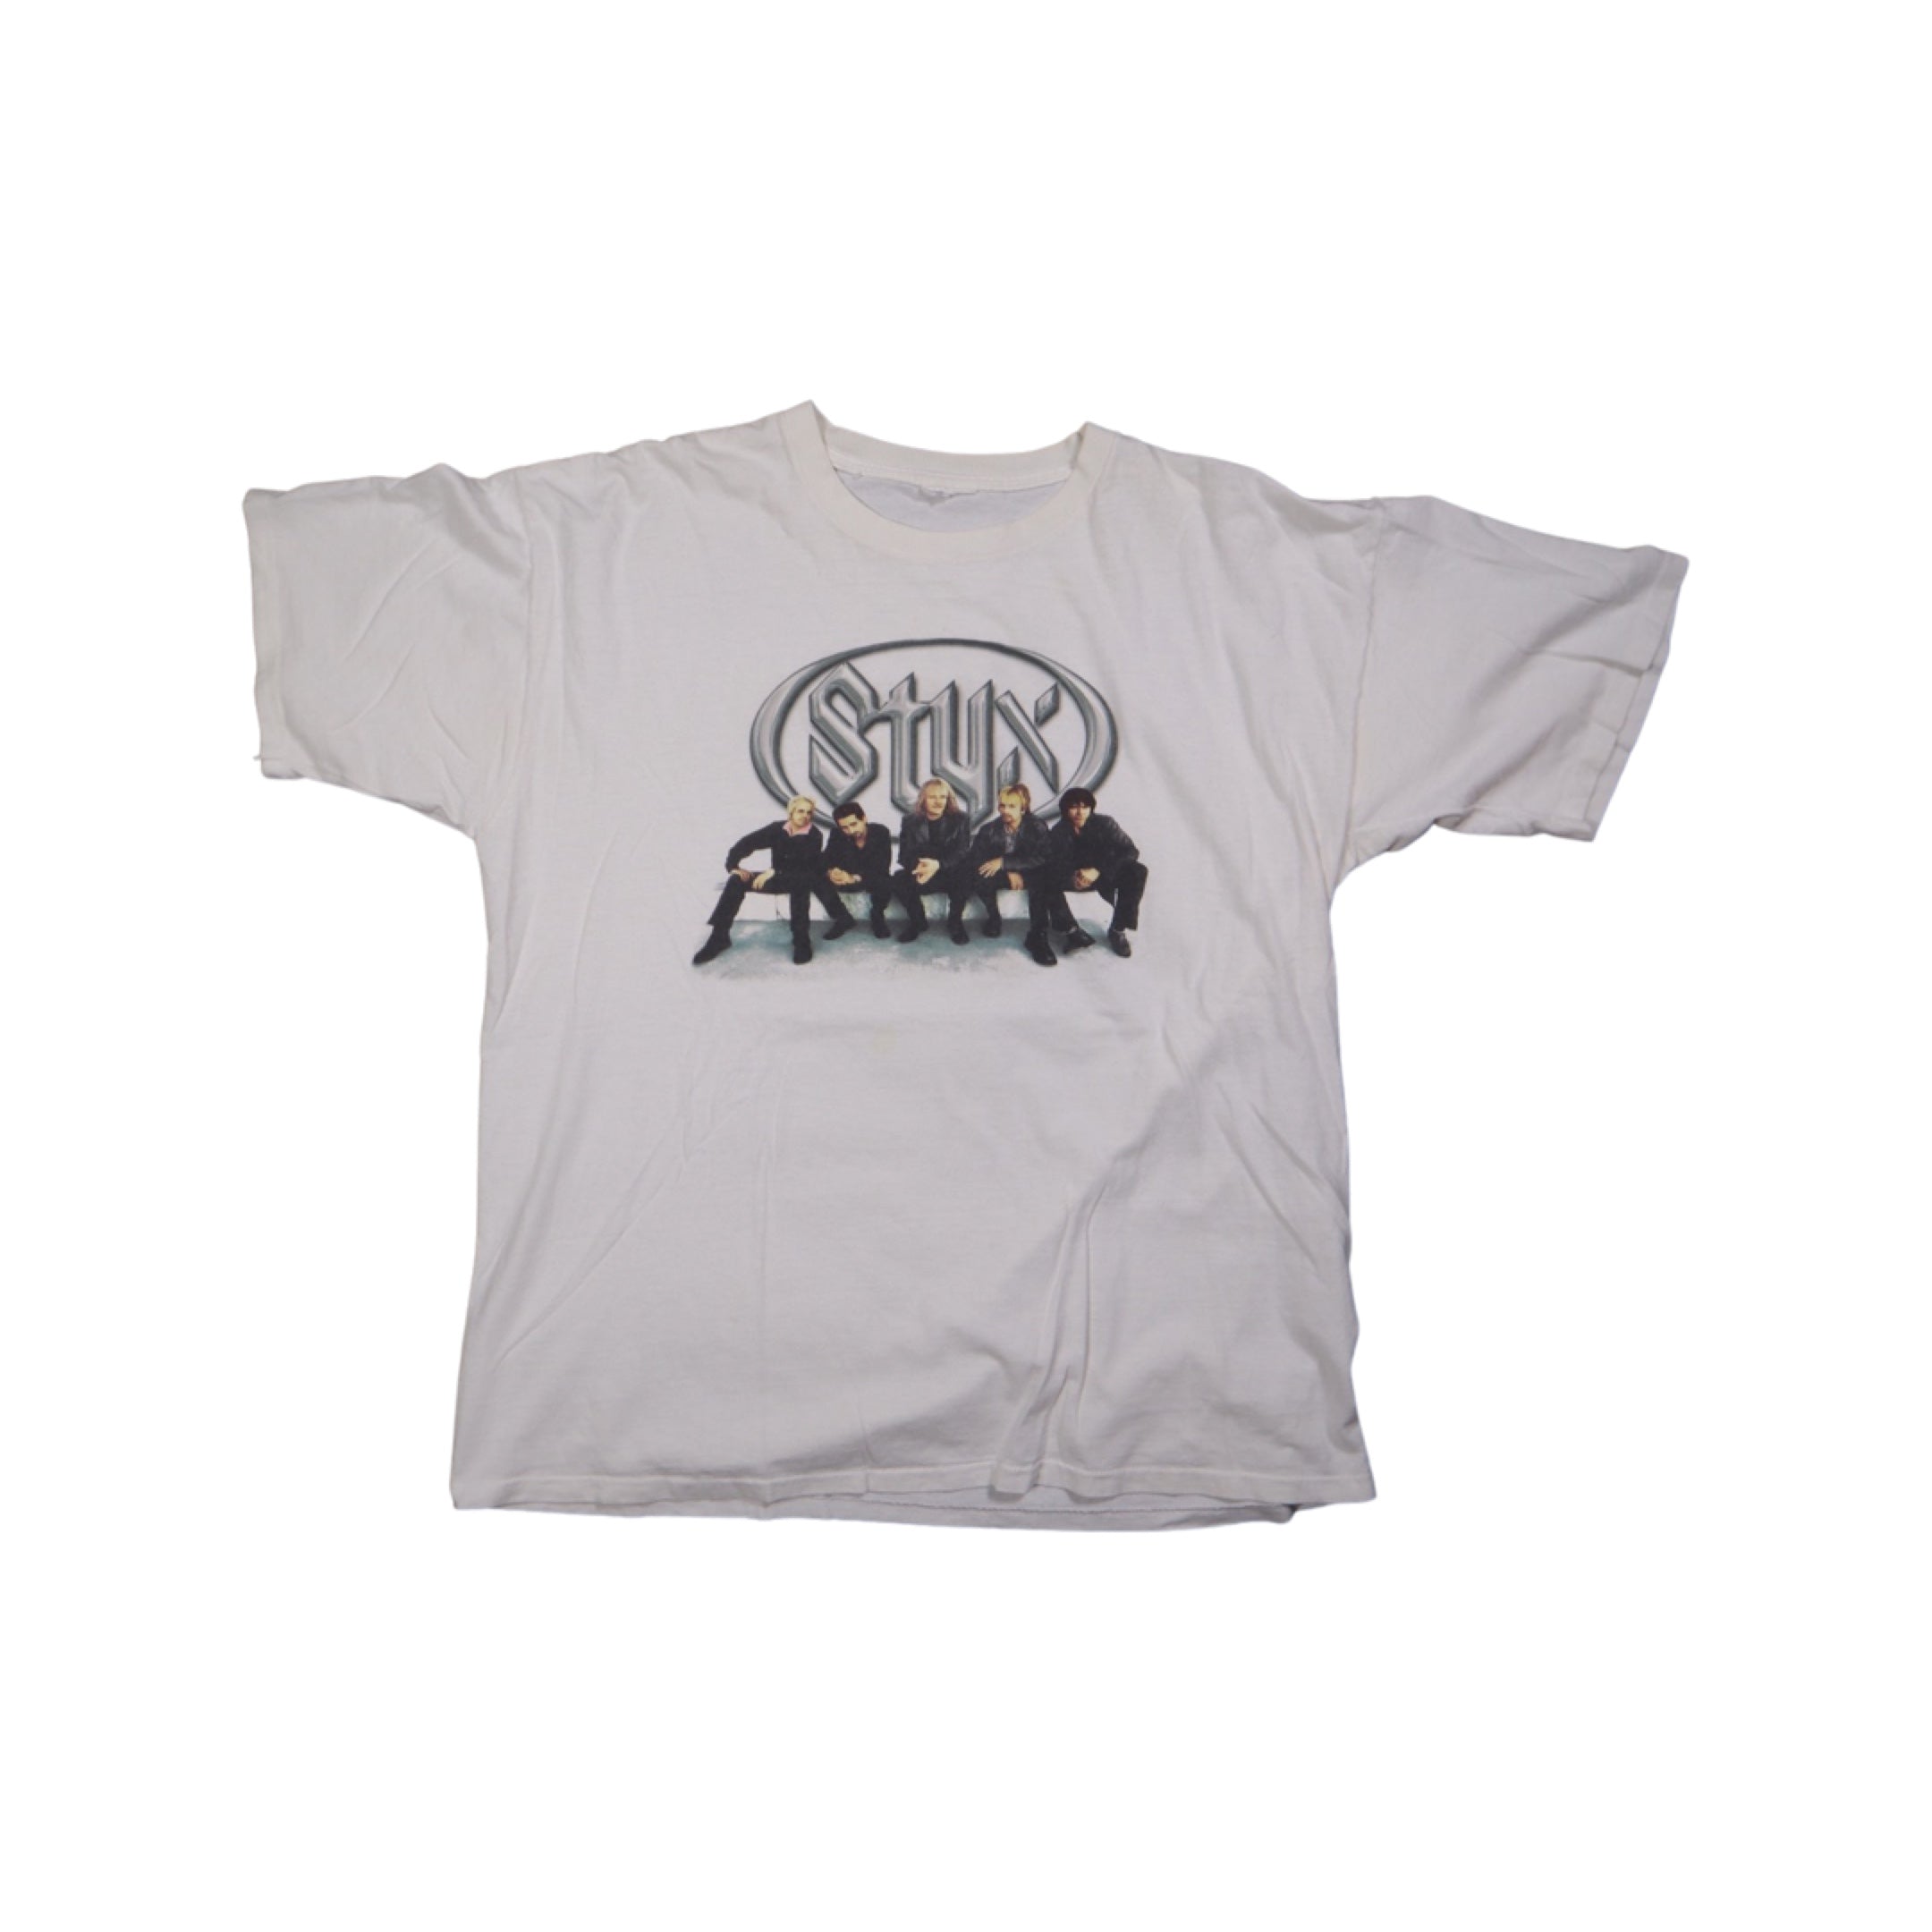 Styx 2000 World Tour T-Shirt Grail (XL)